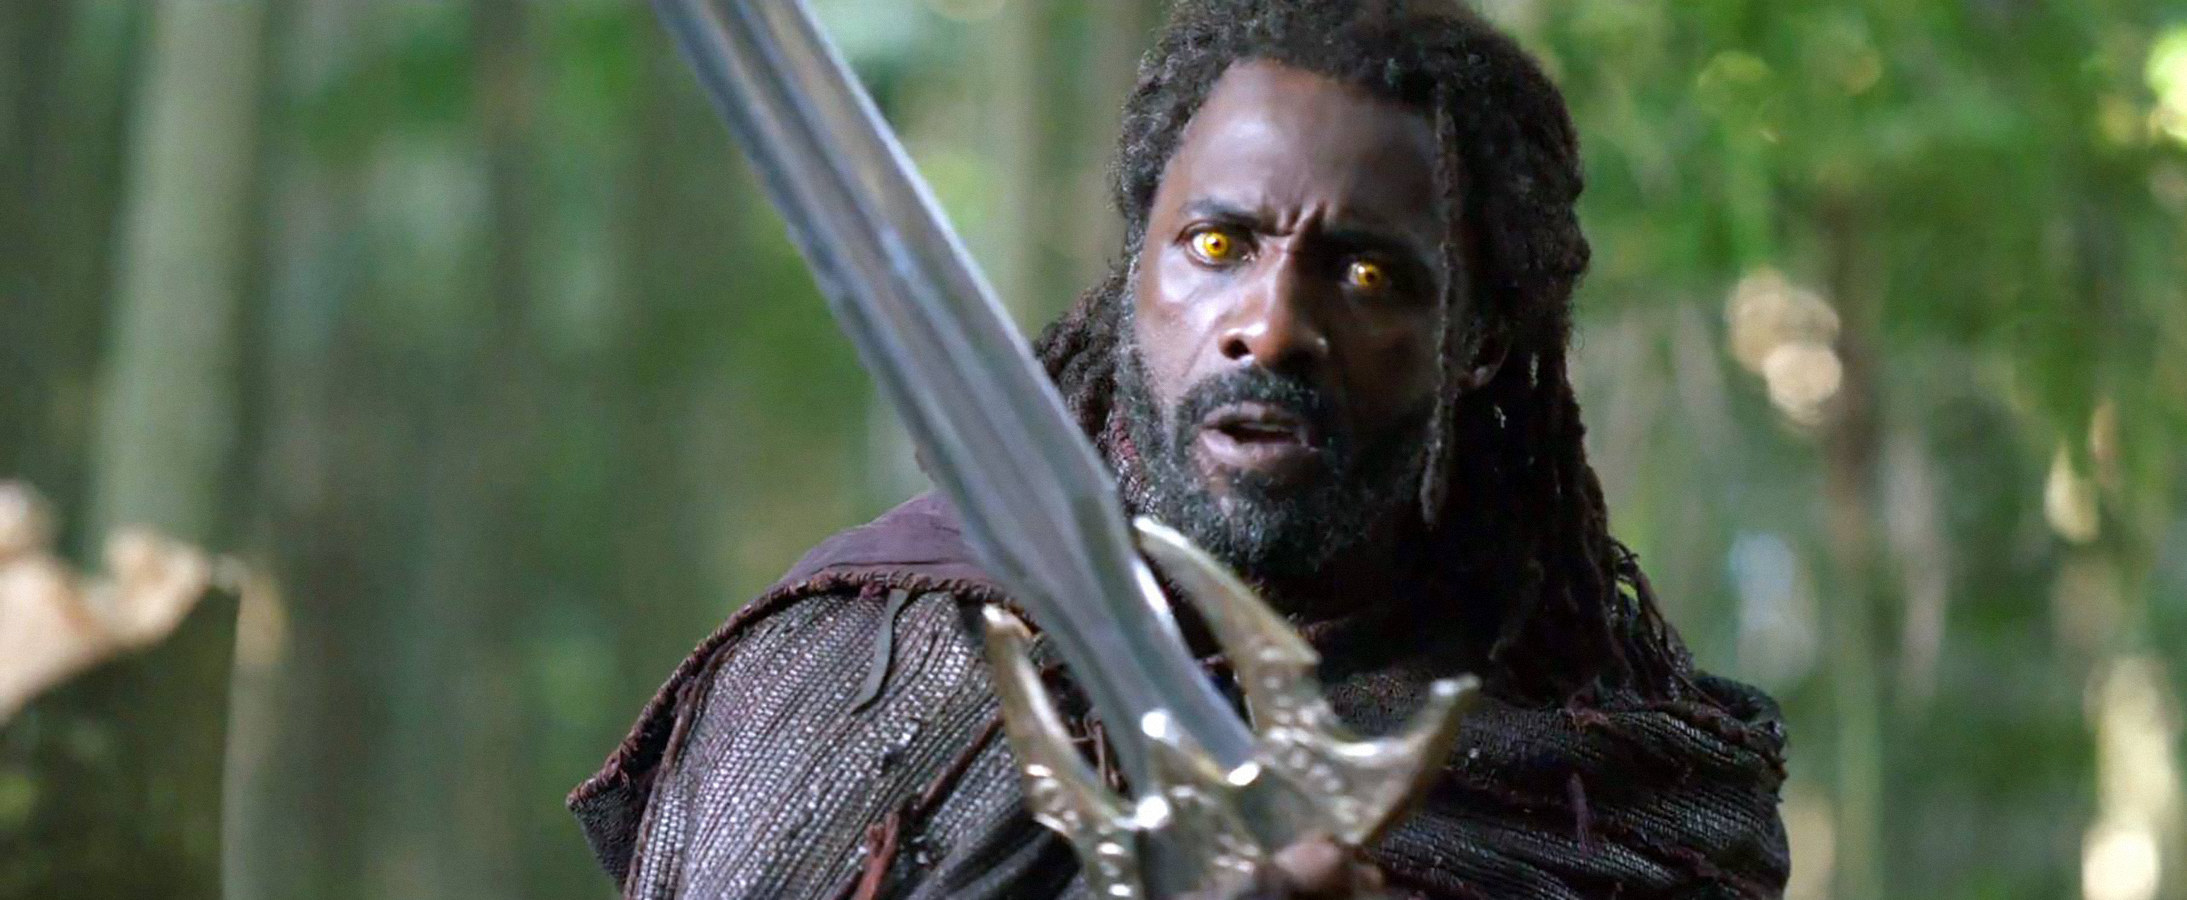 Idris wielding a sword